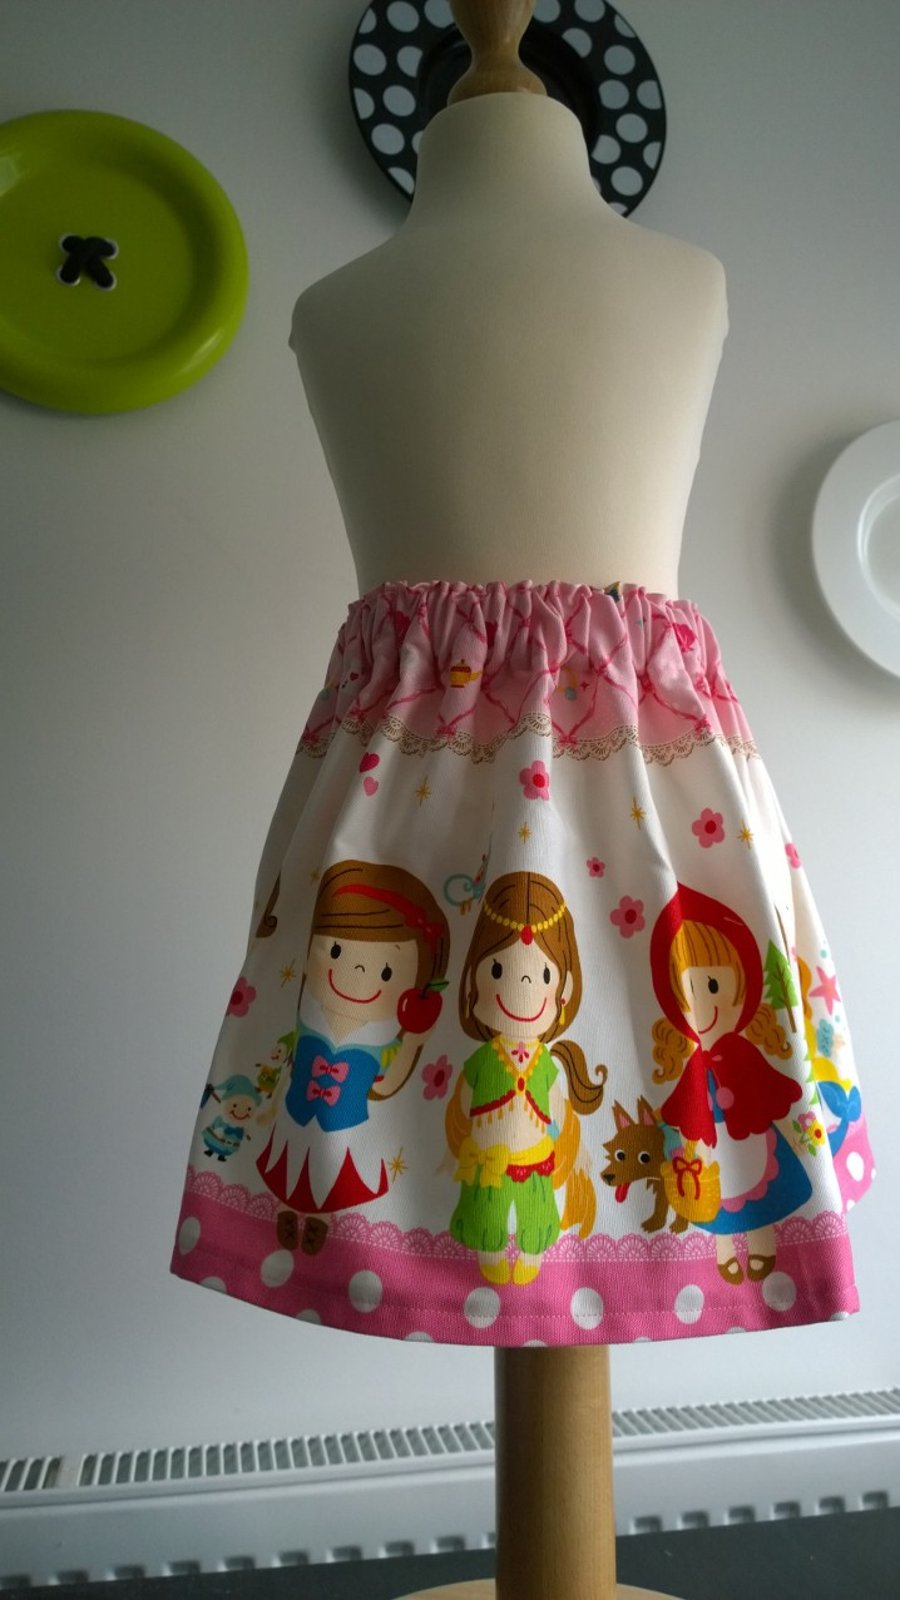 Princess - Fairy Tale Skirt - 3 - 4 years SALE